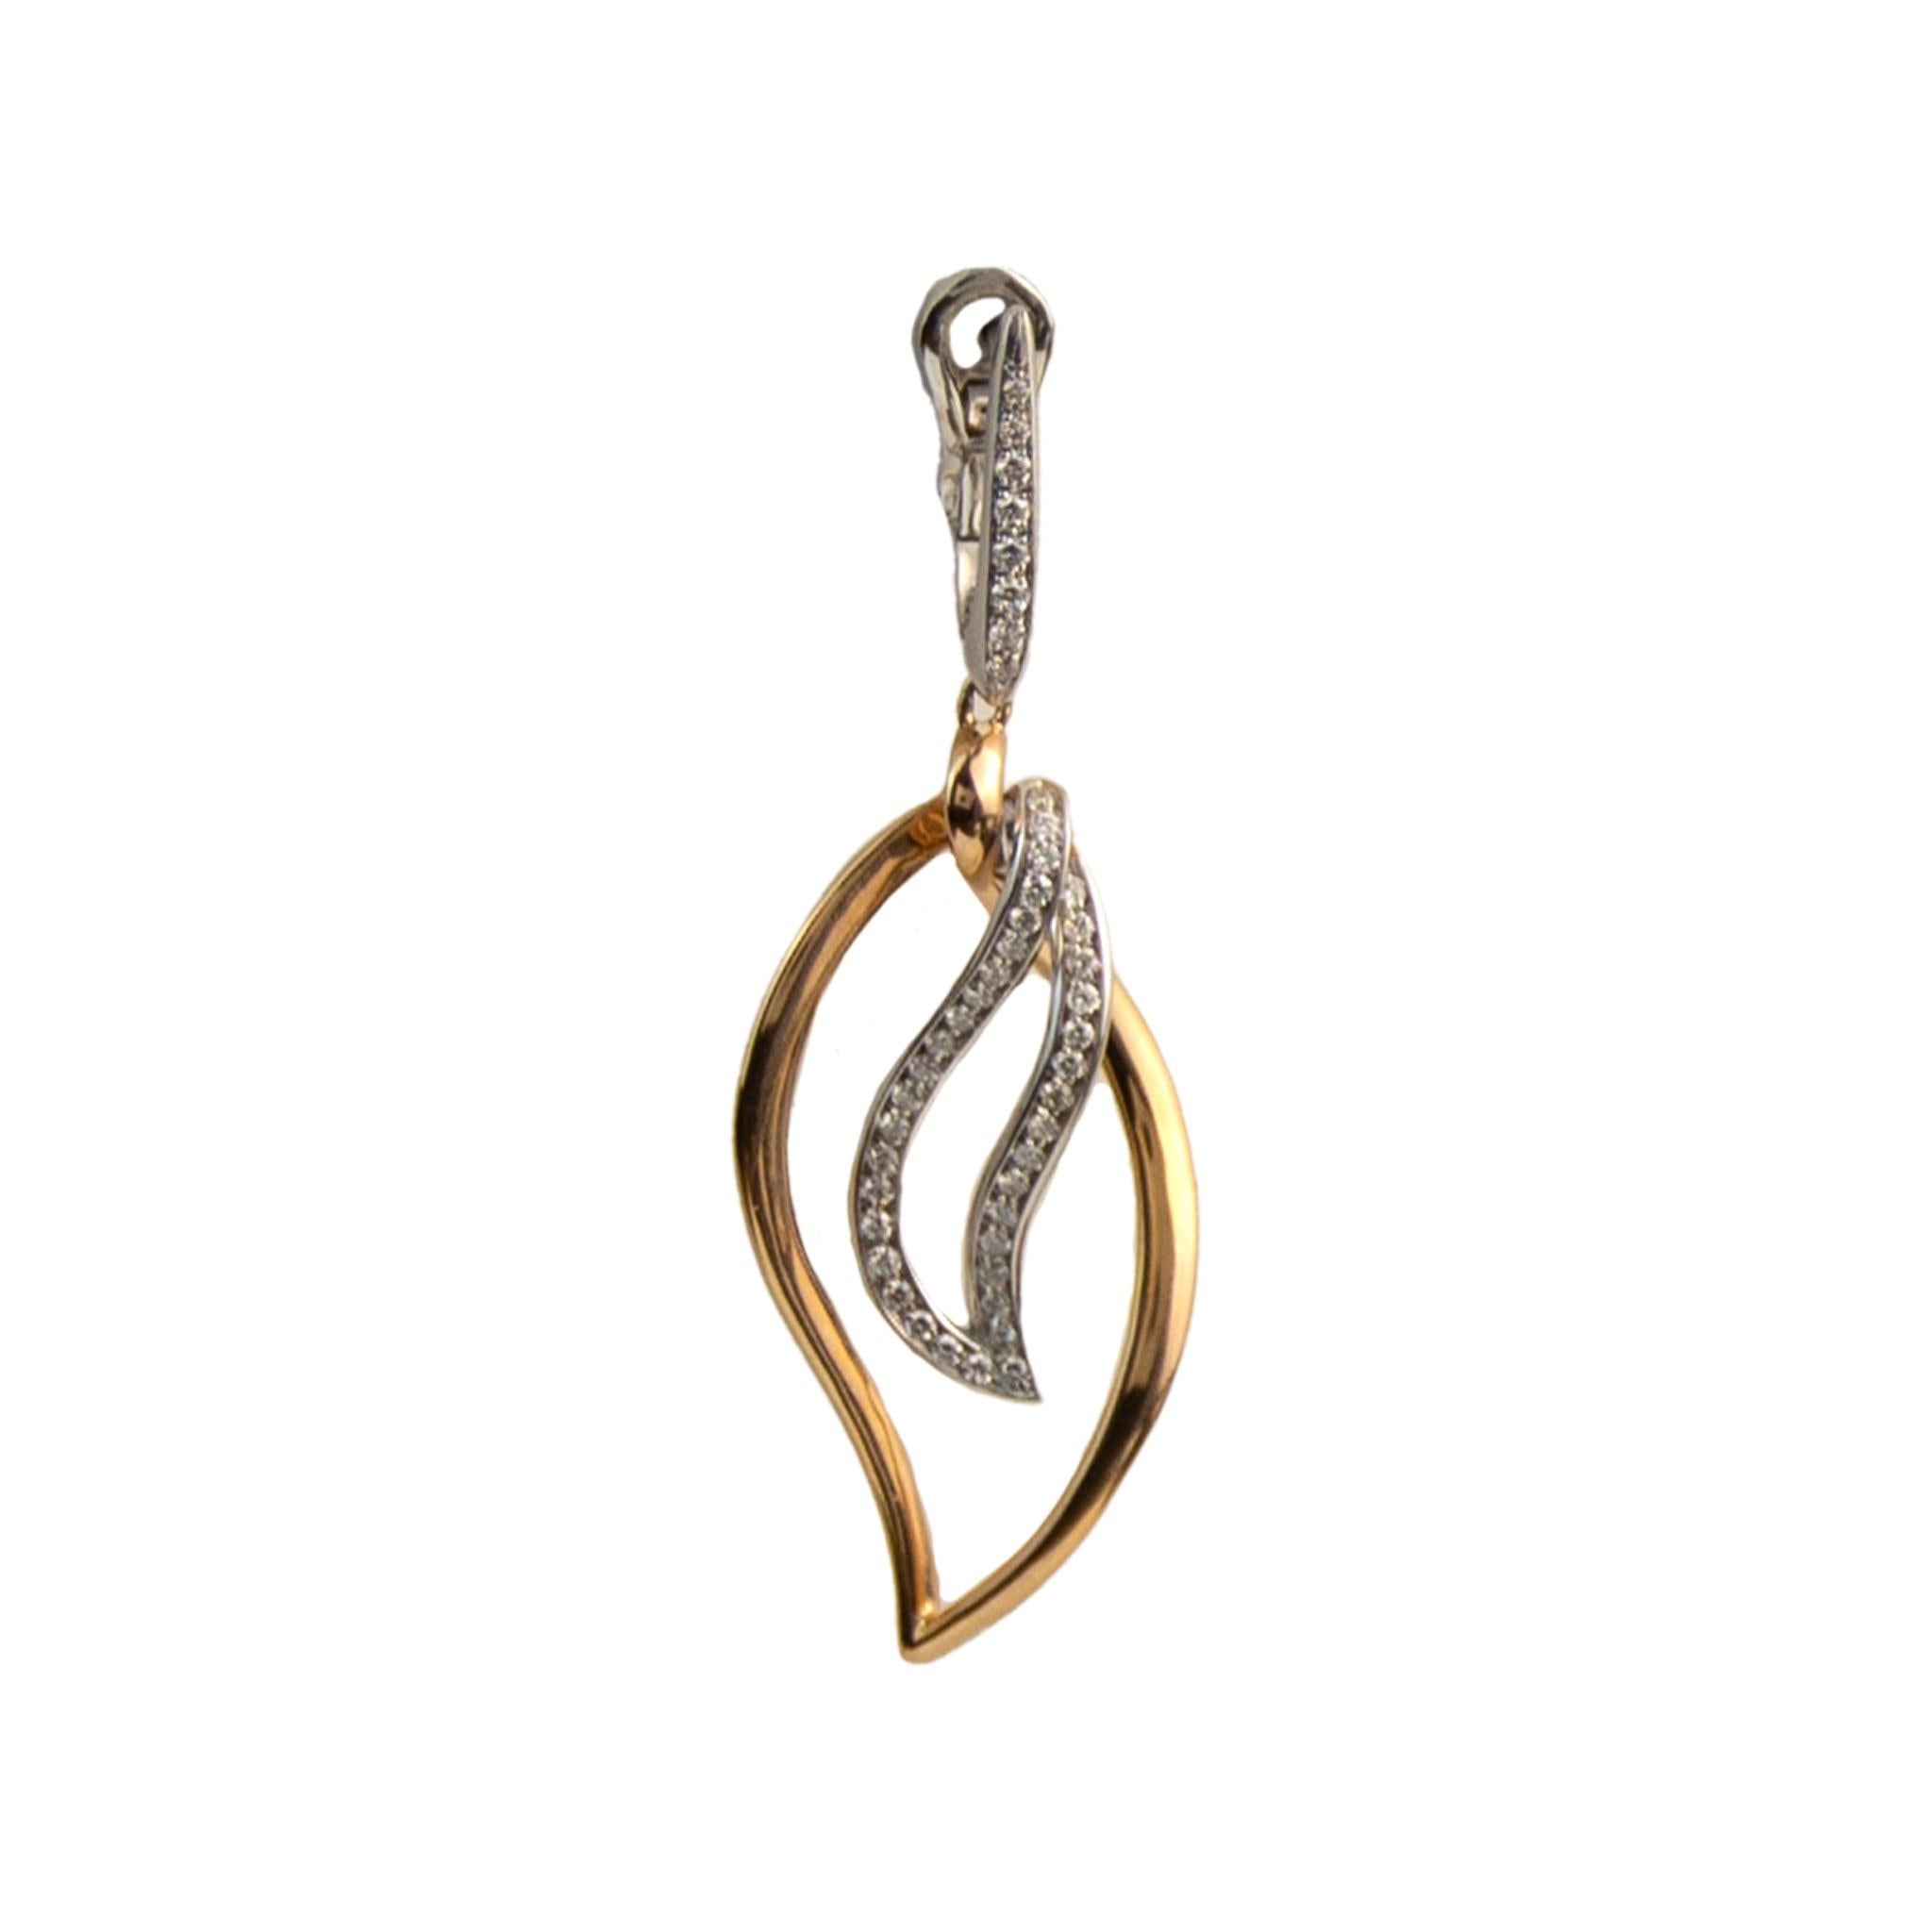 Luca Carati Leaf Pendant Earrings
18K White & Rose Gold
Diamond: 0.74ctw
G-color, VVS clarity
SKU: LC01028
Retail price: $7,100.00